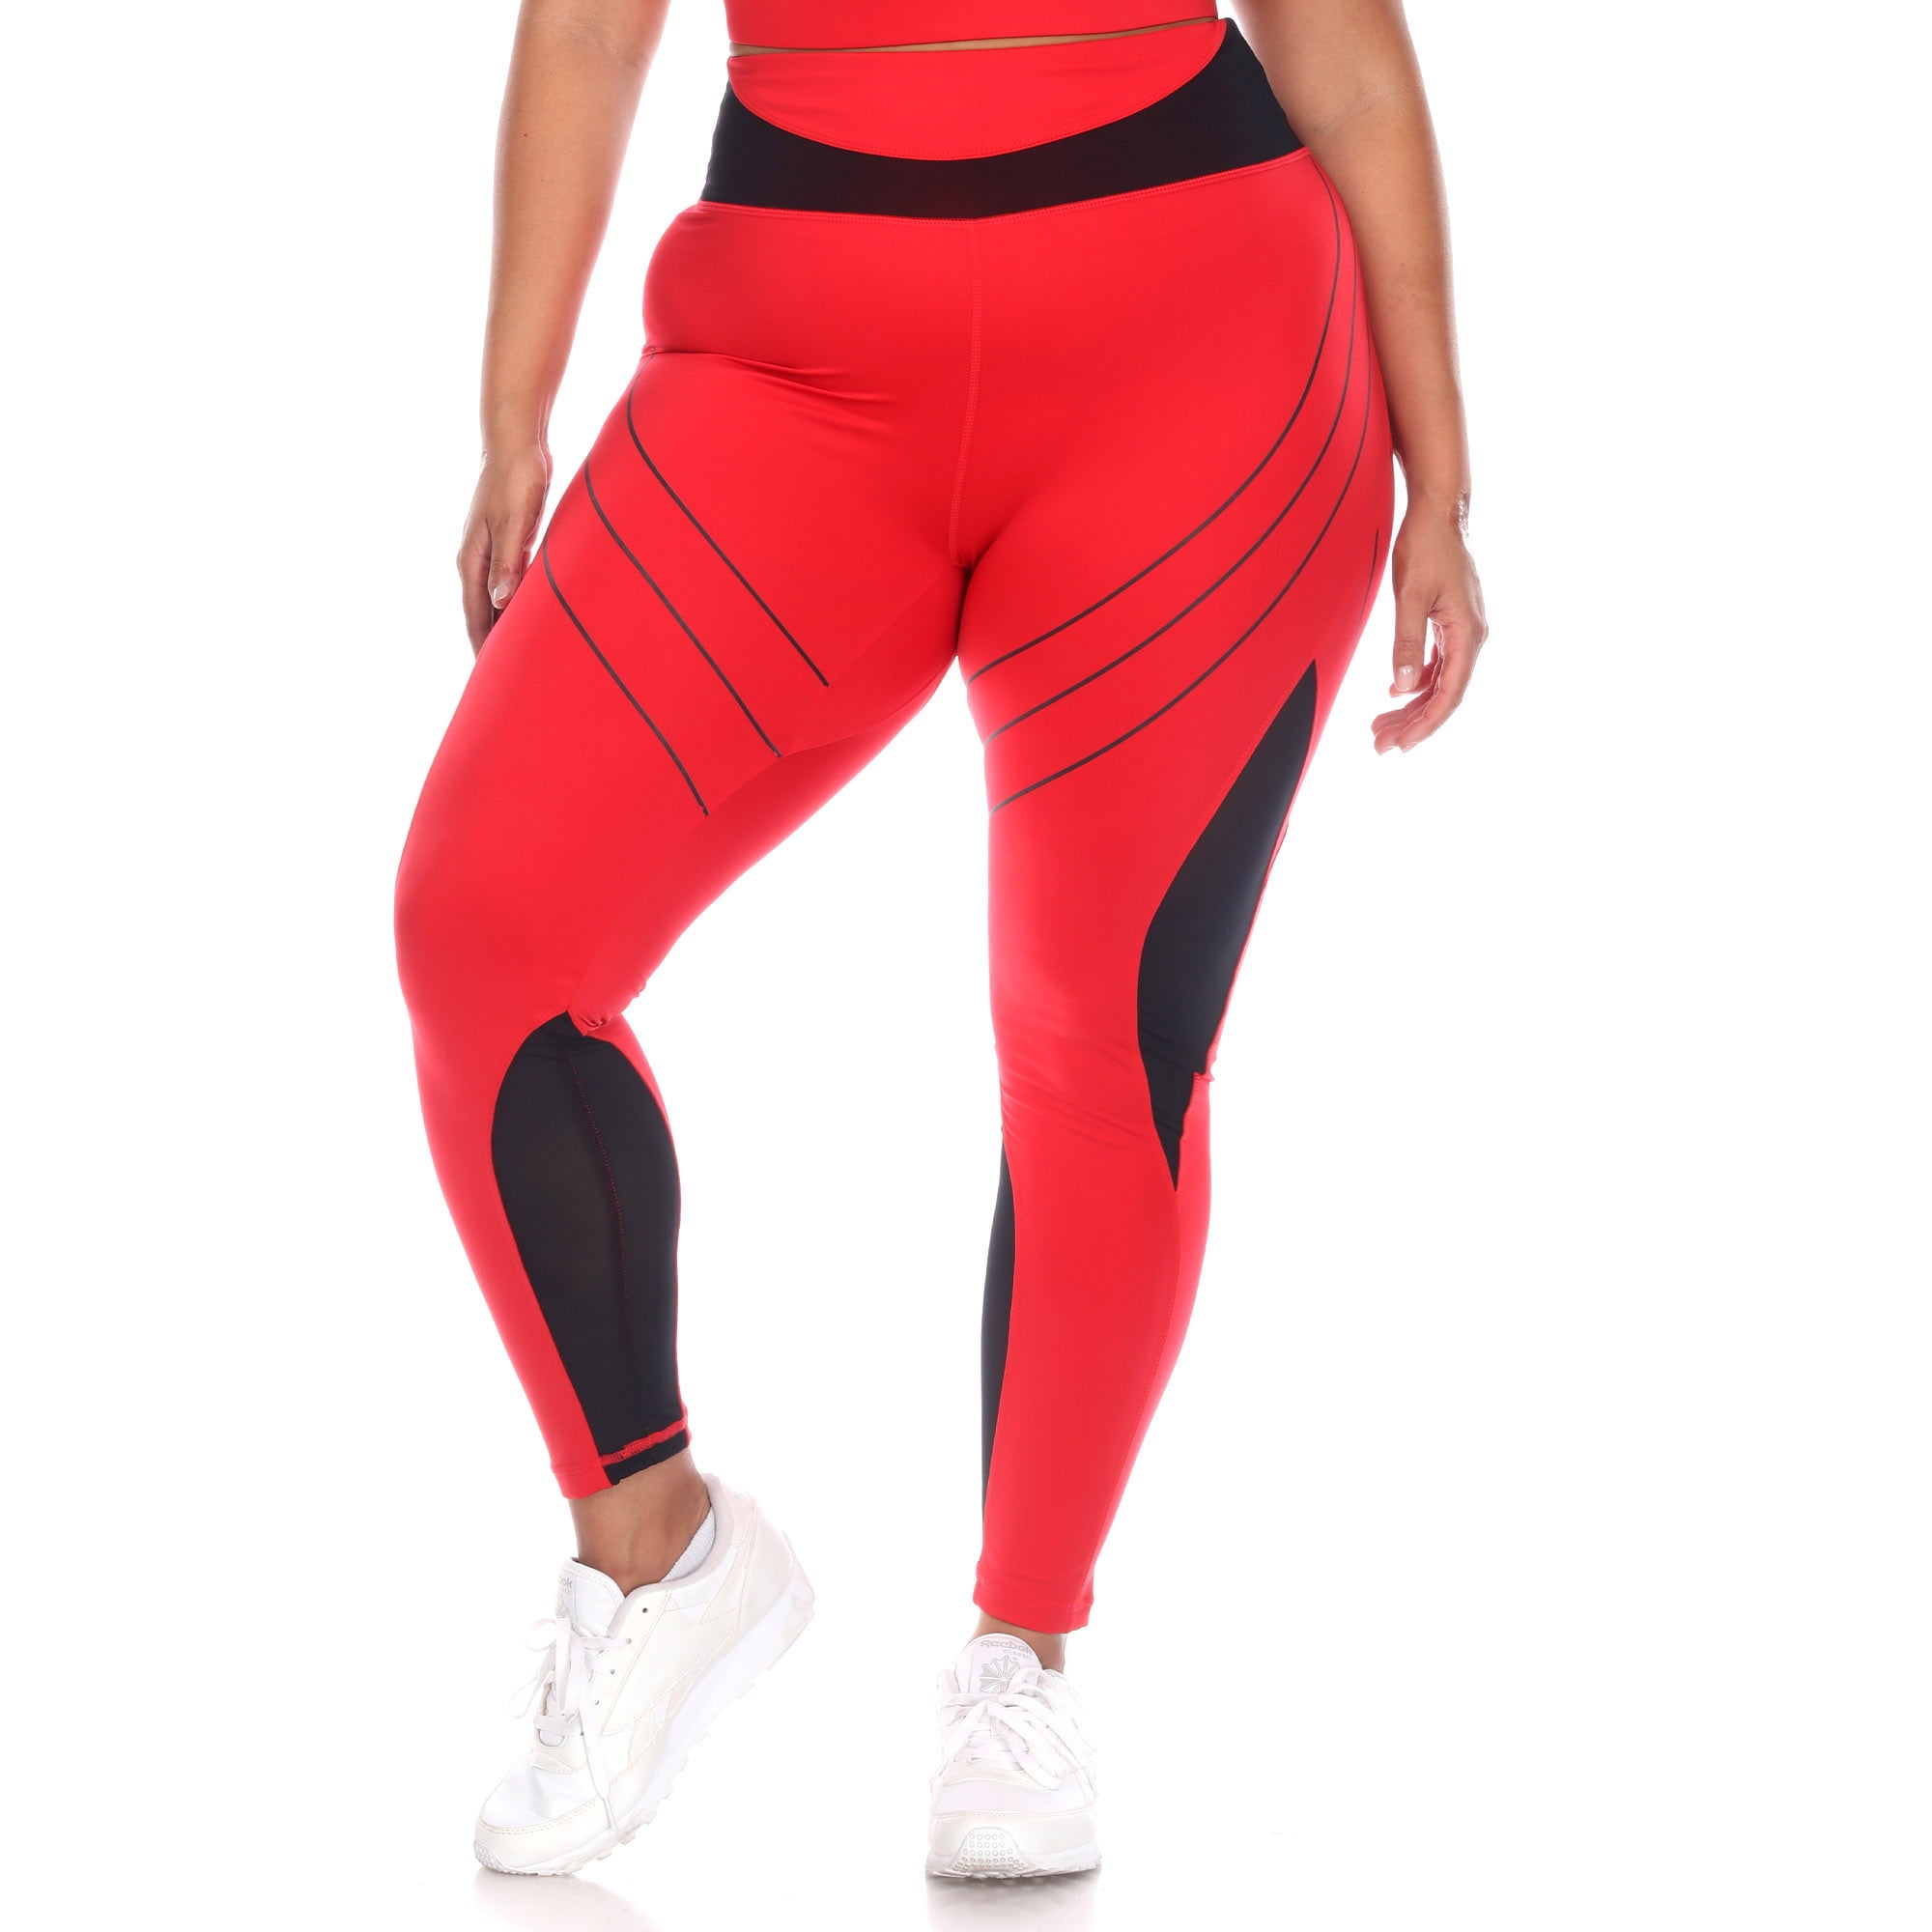 PMUYBHF Female Xl Plus Size Red Leggings Women's Casual Slim Fit Gym  Leggings with Carnival Print Print and Casual Comfort Black Leggings Women  Dressy